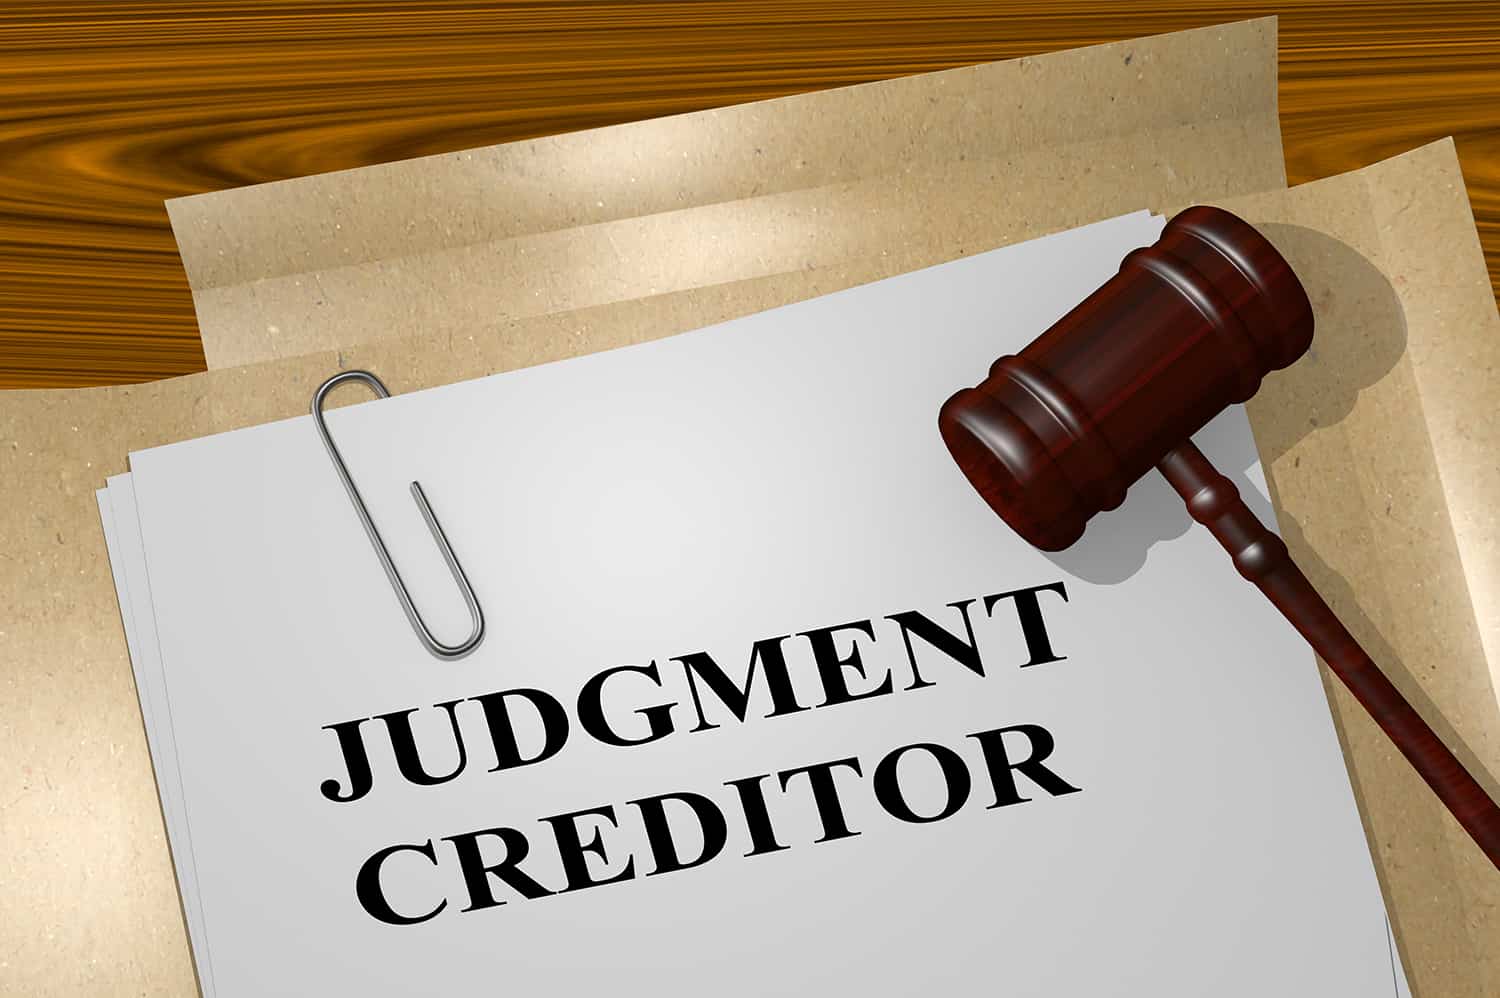 Judgement Creditor